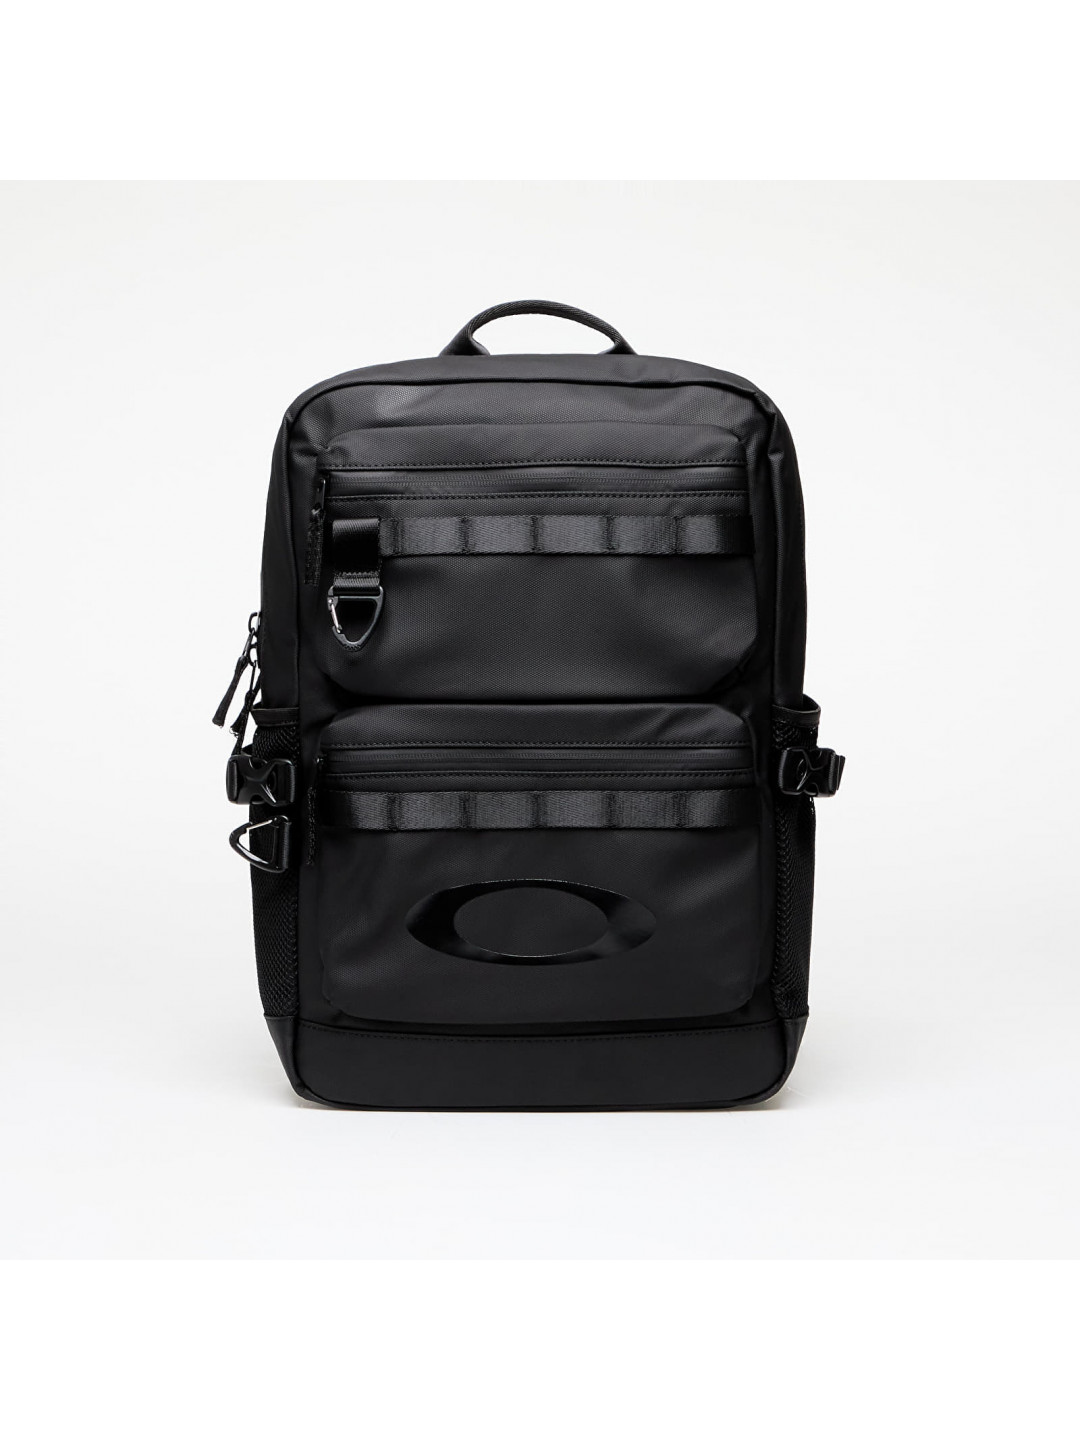 Oakley Rover Laptop Backpack Blackout